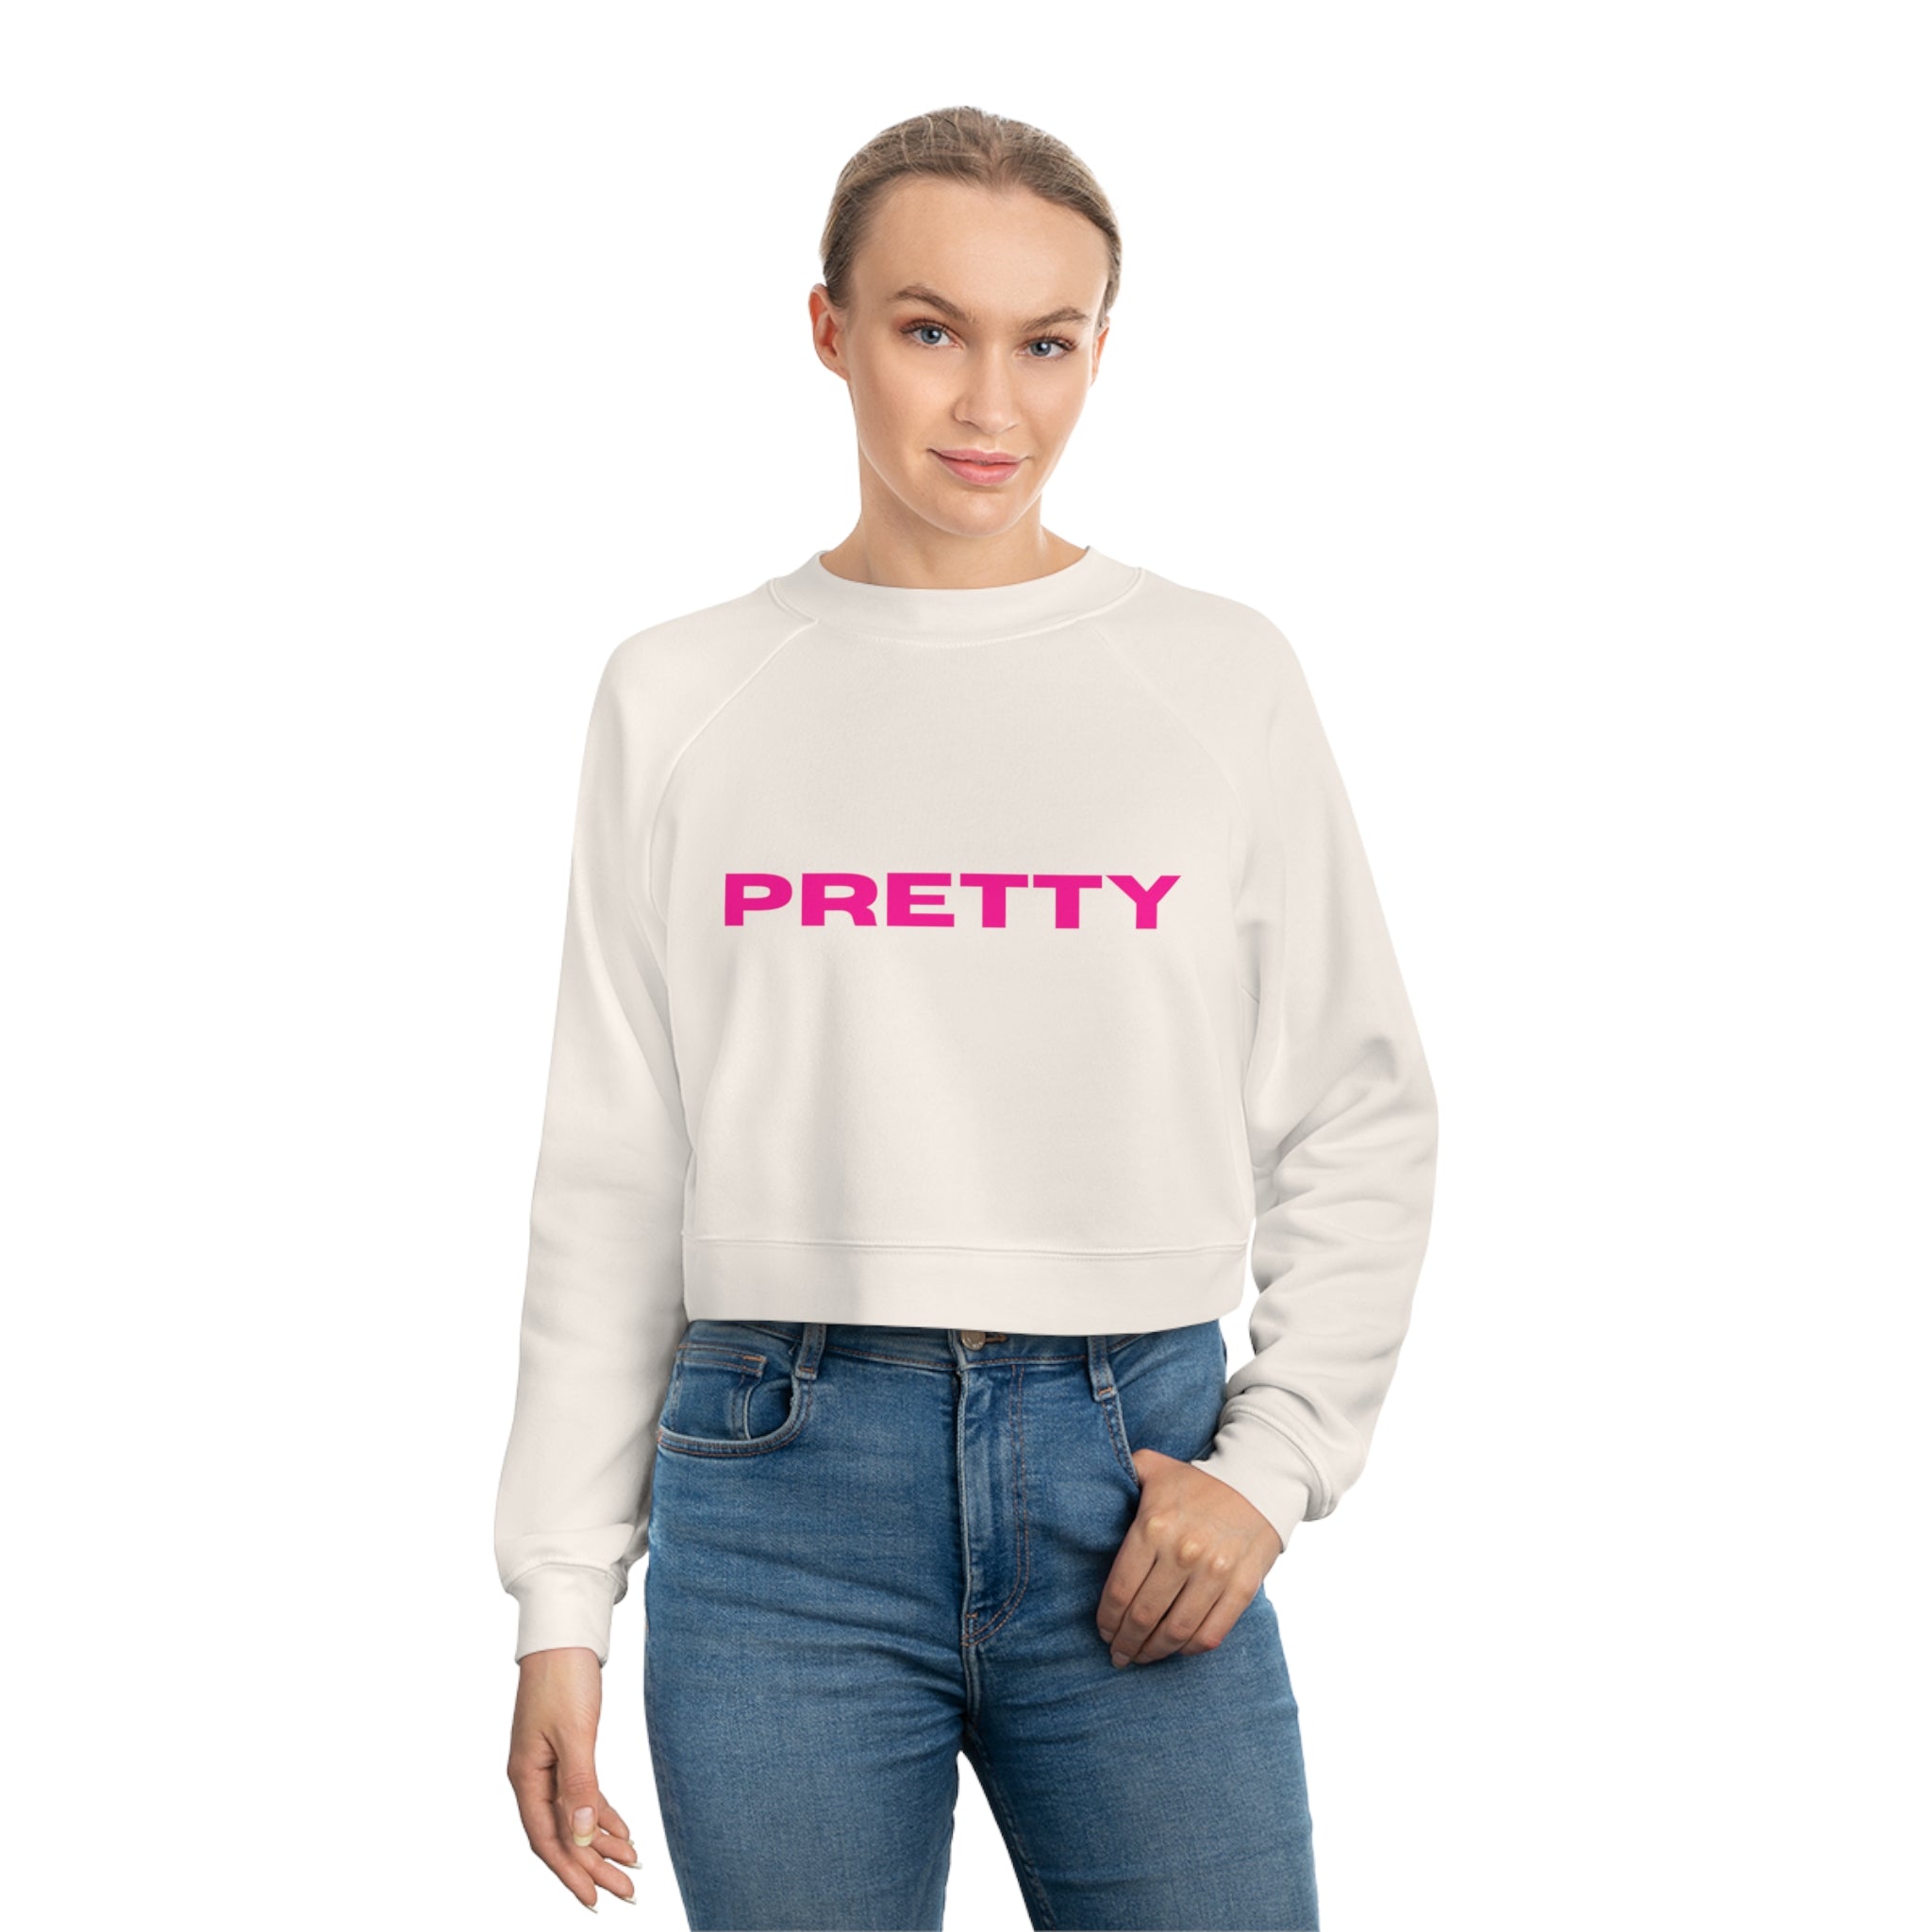 'PRETTY' Cropped Pullover